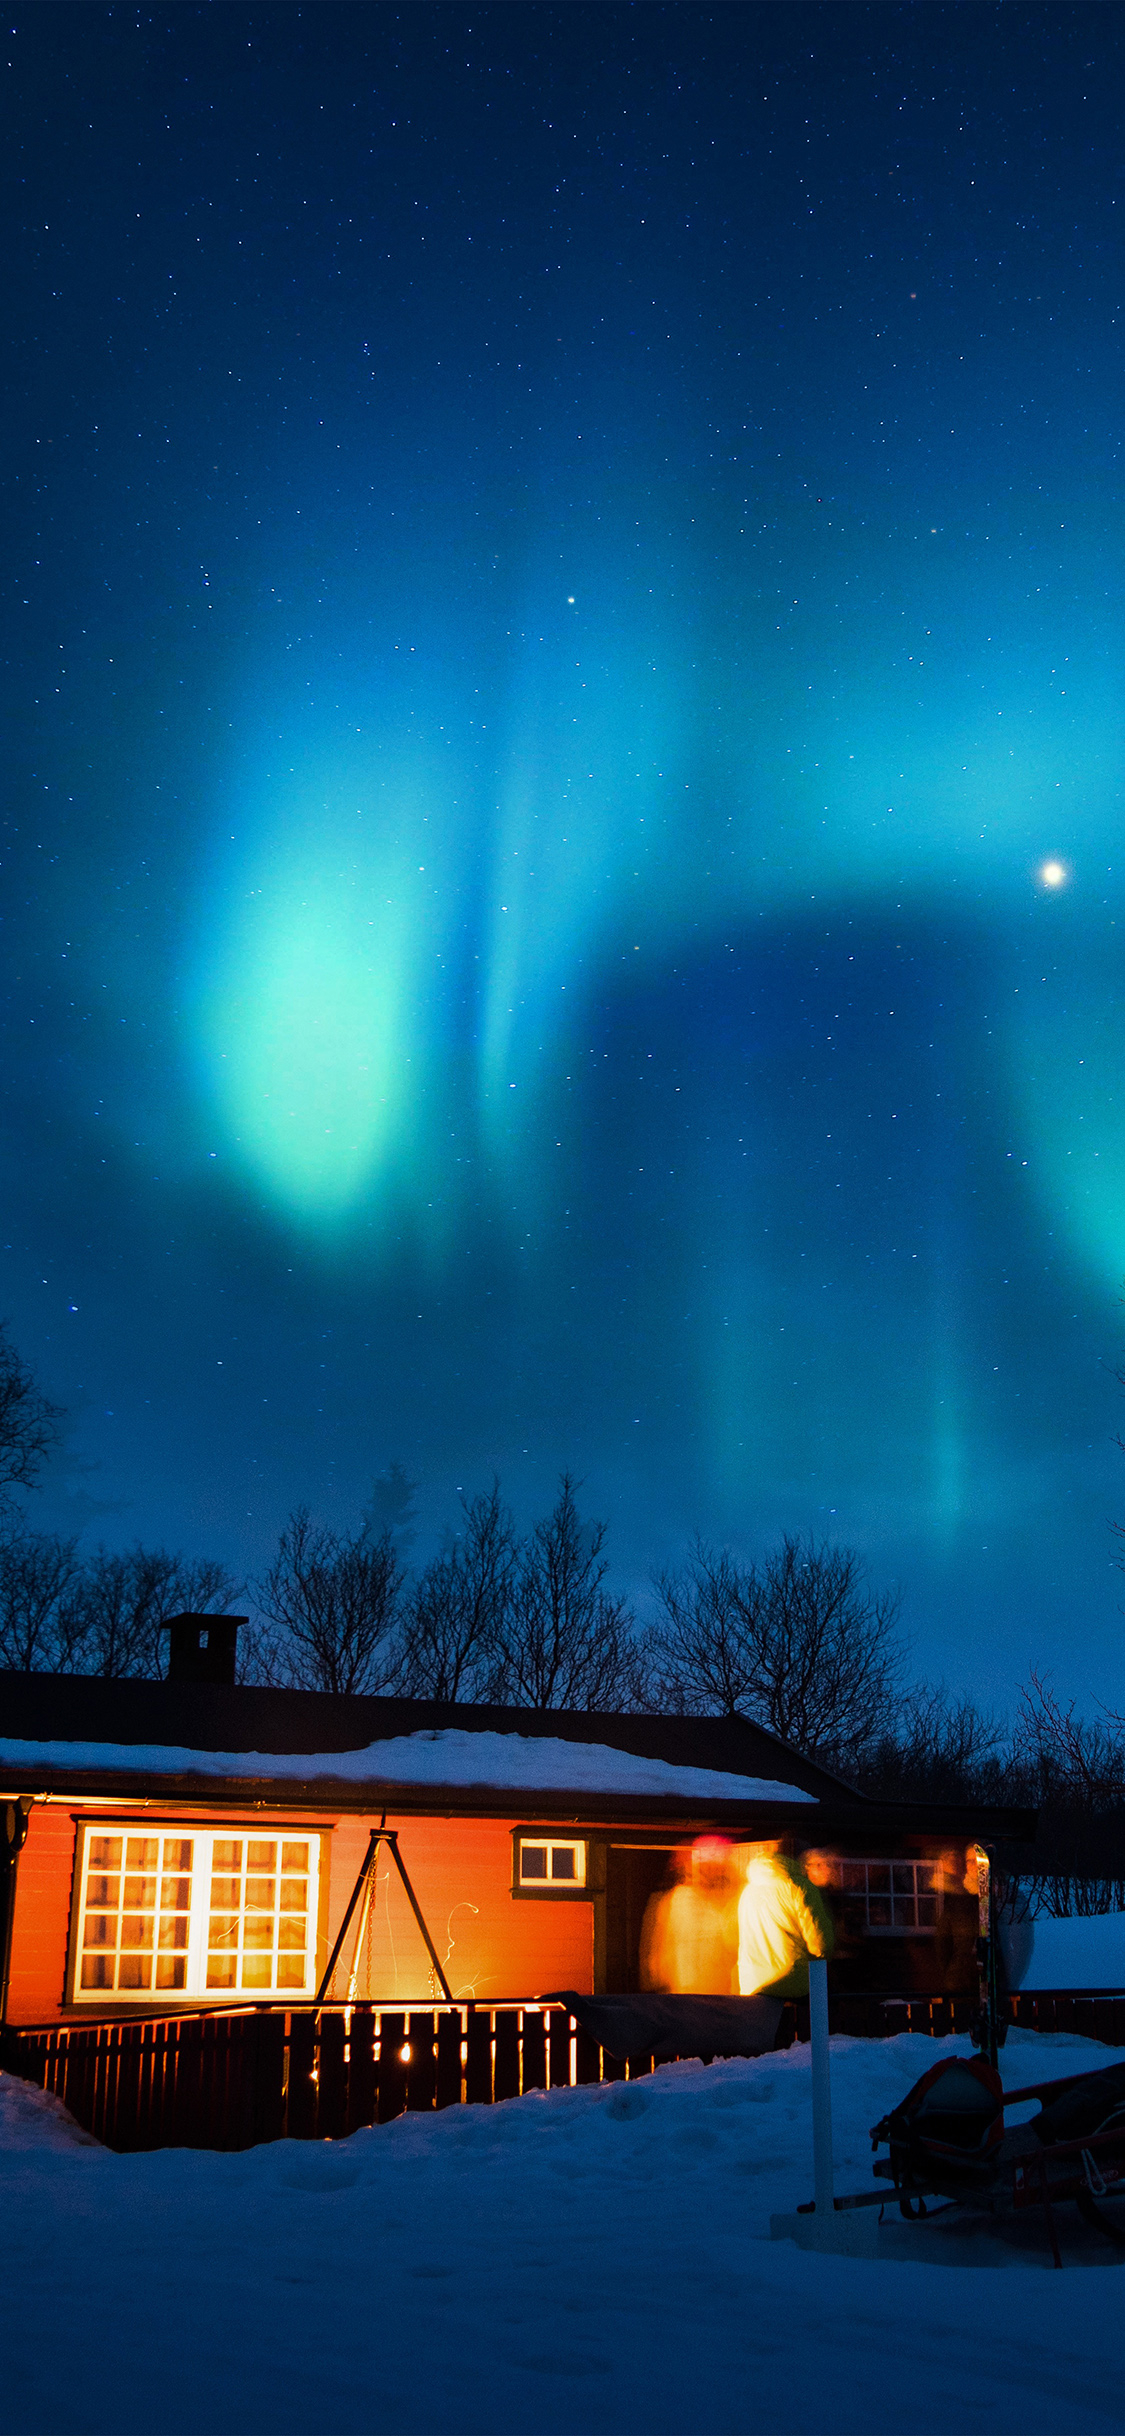 1125x2436 | iPhone11 wallpaper | nl51-aurora-canada-house-night- winter-mountain-sky